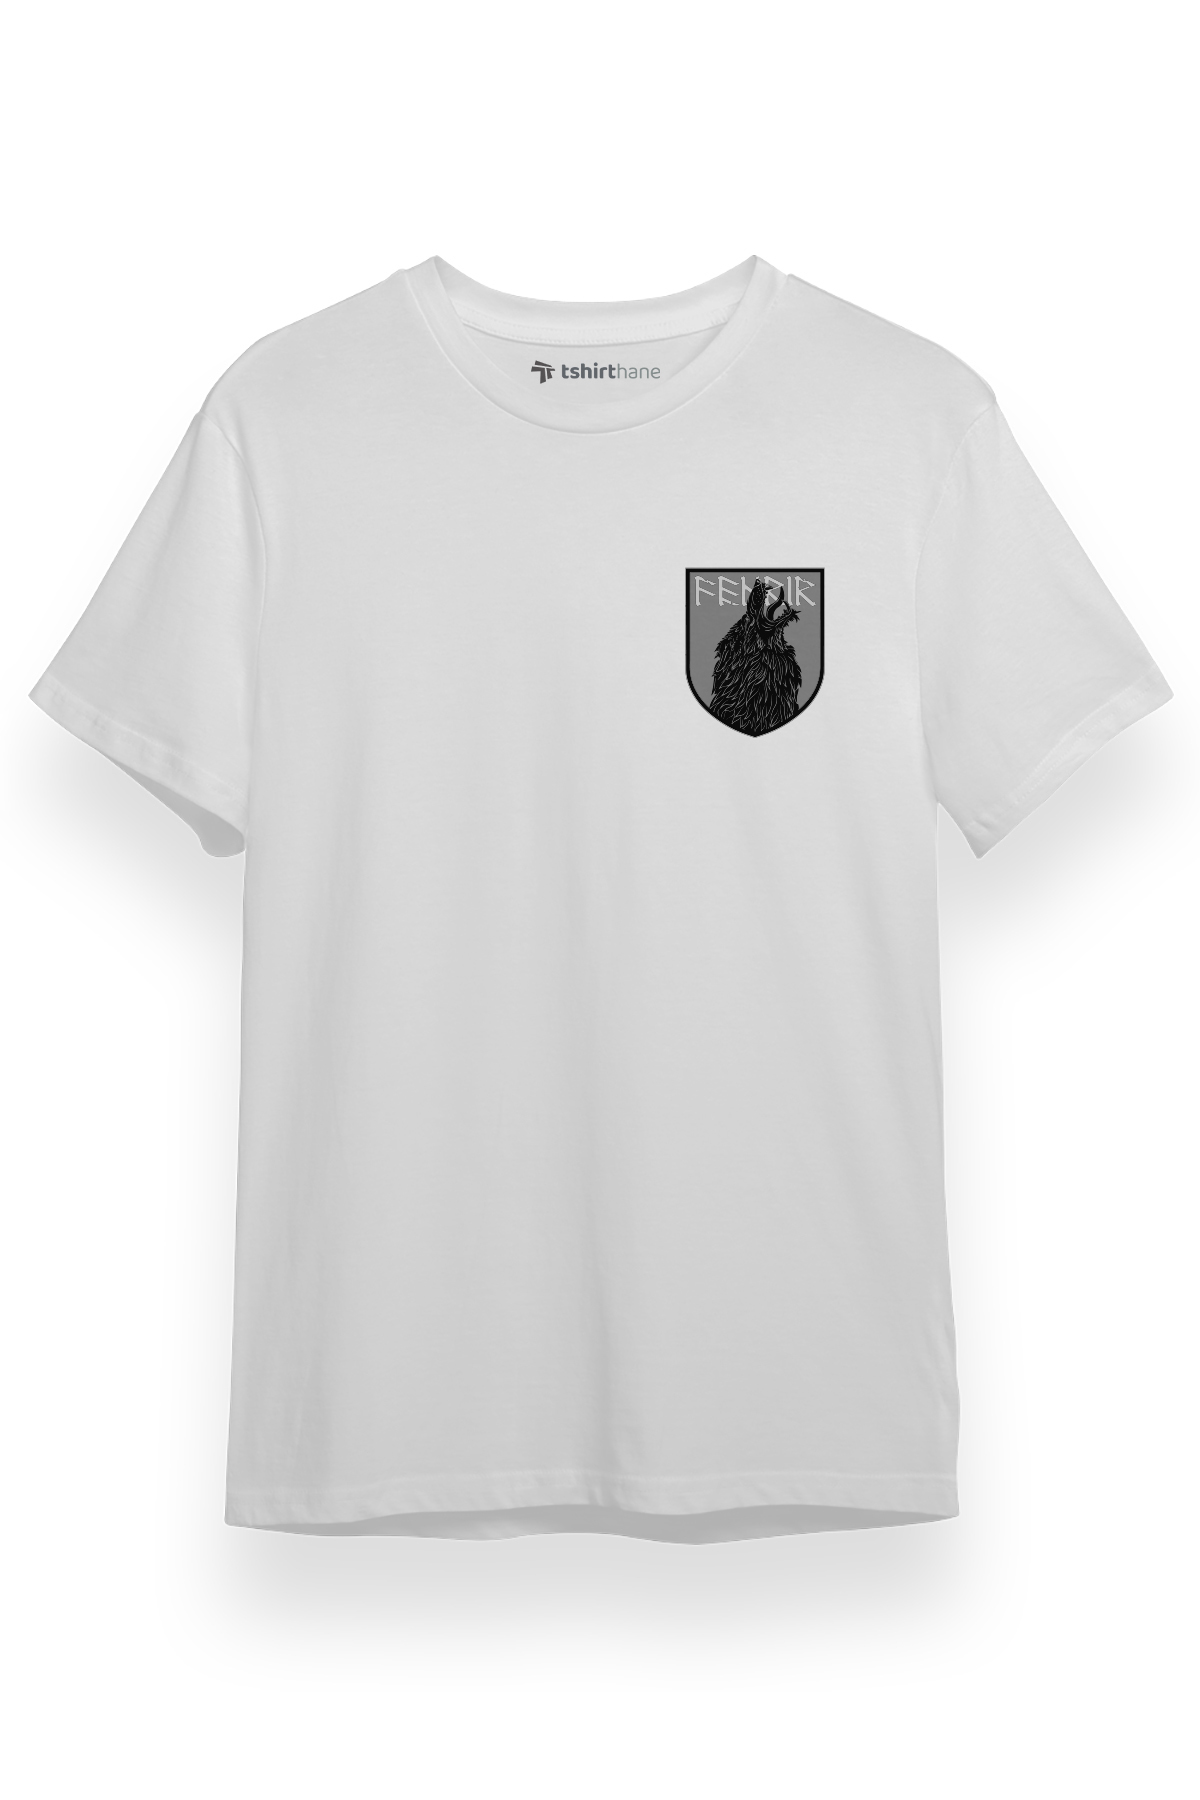 Ragnarok Fenrir Logo Beyaz Kısa kol Erkek Tshirt